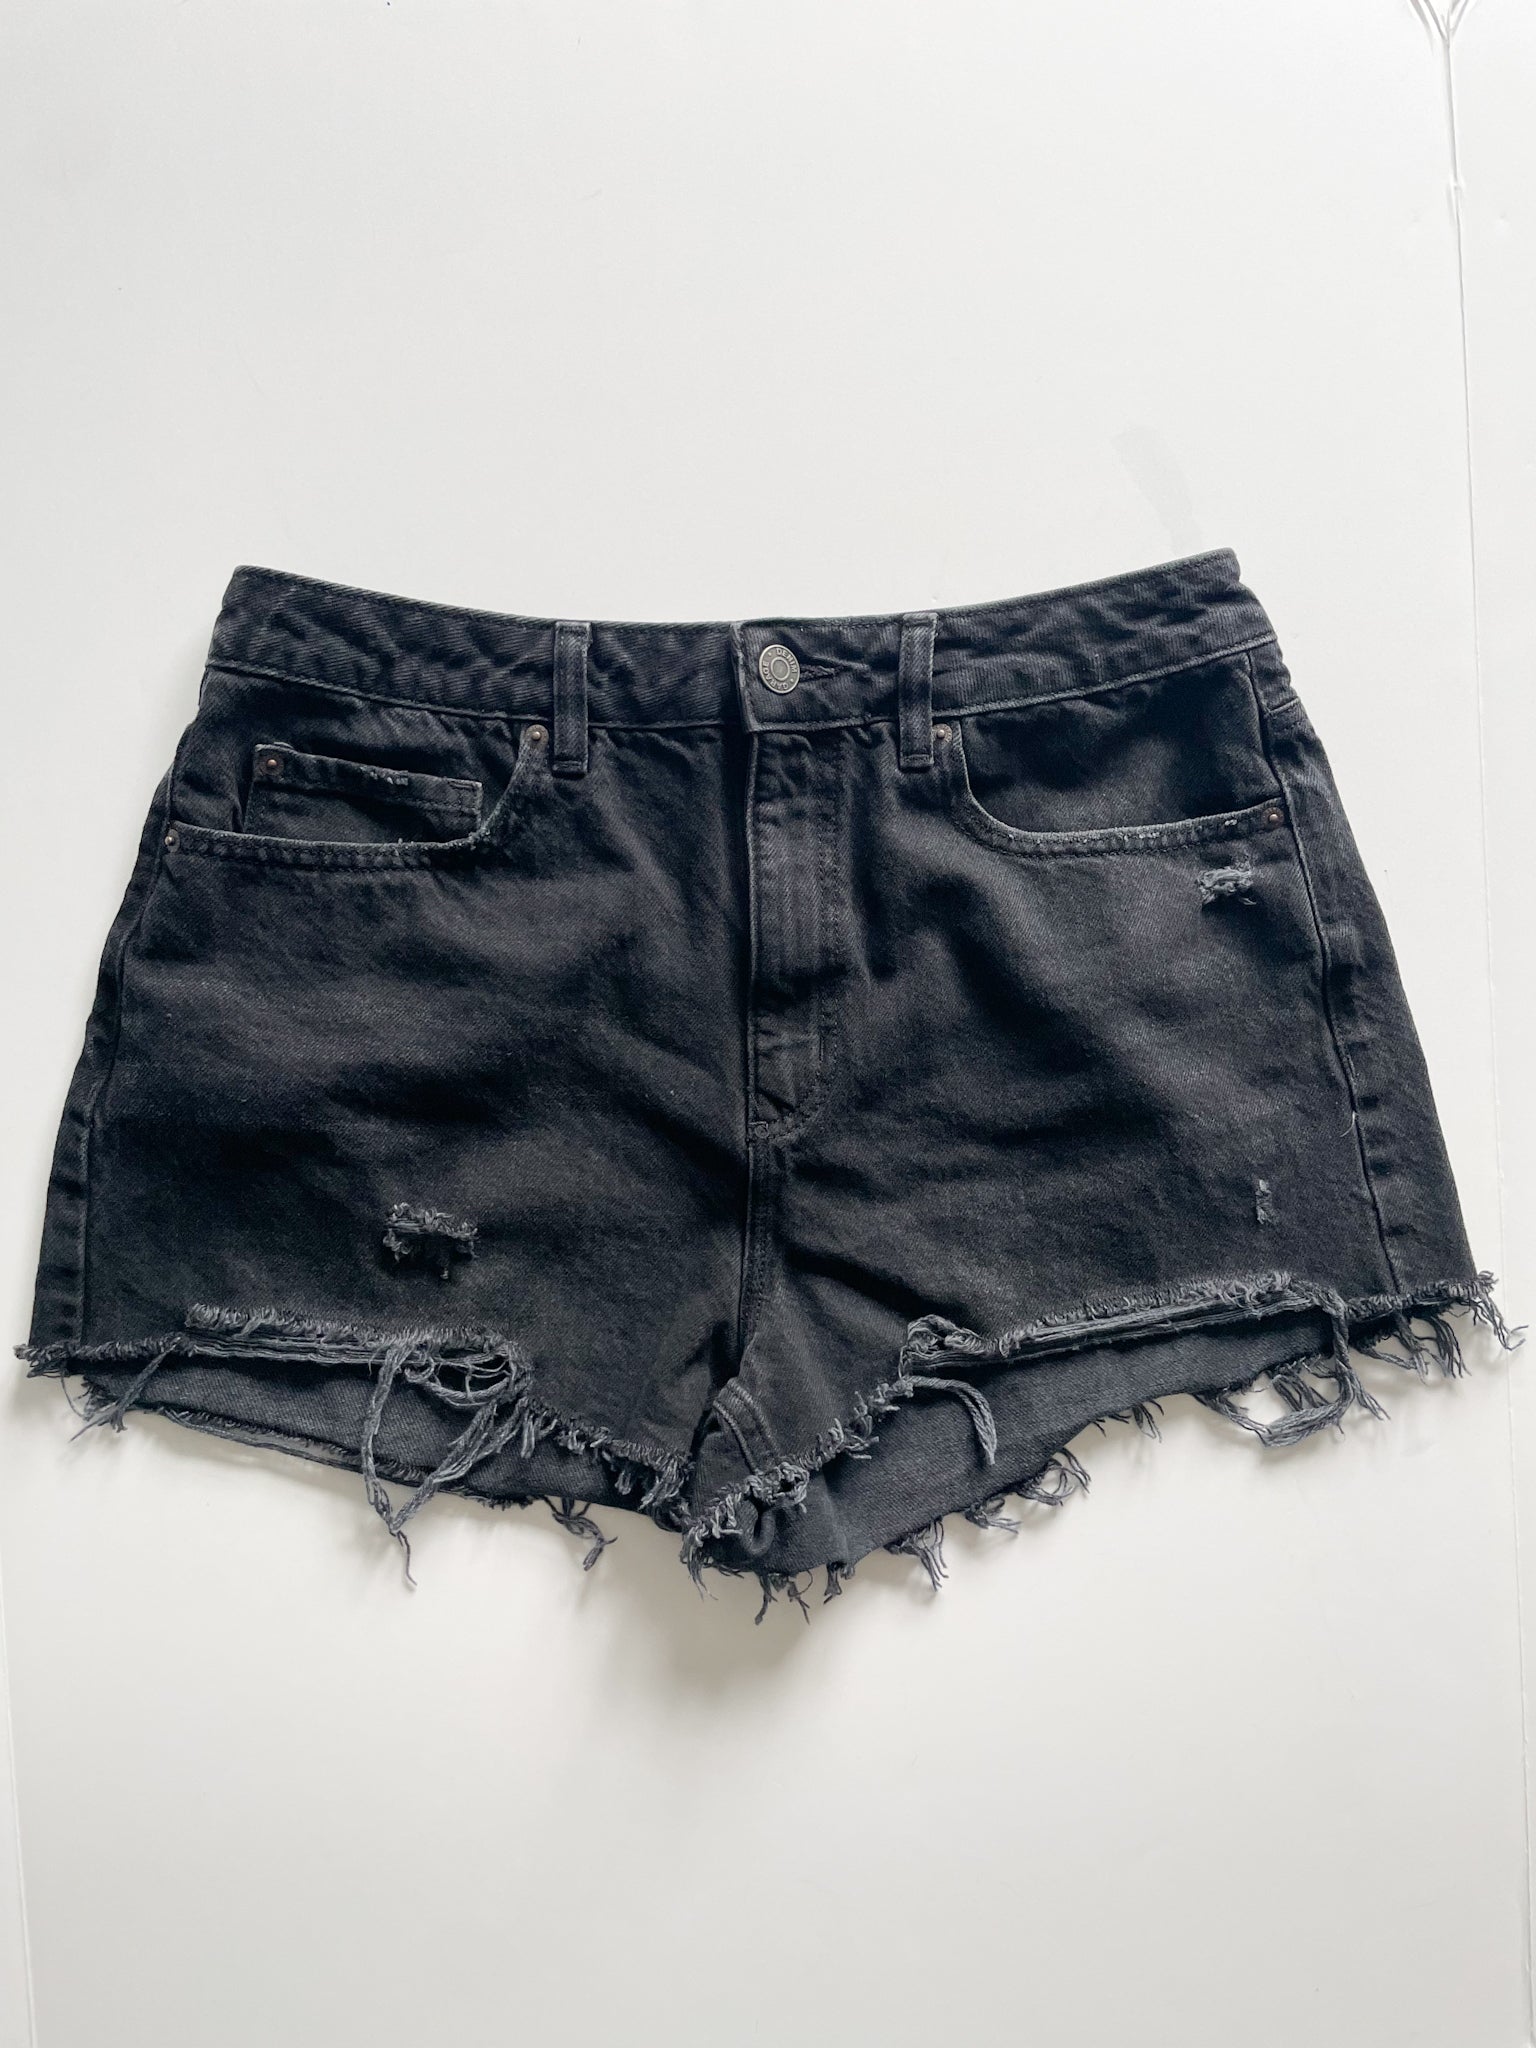 Garage Black Cutoff High Rise Cotton Denim Festival Shorts - Size